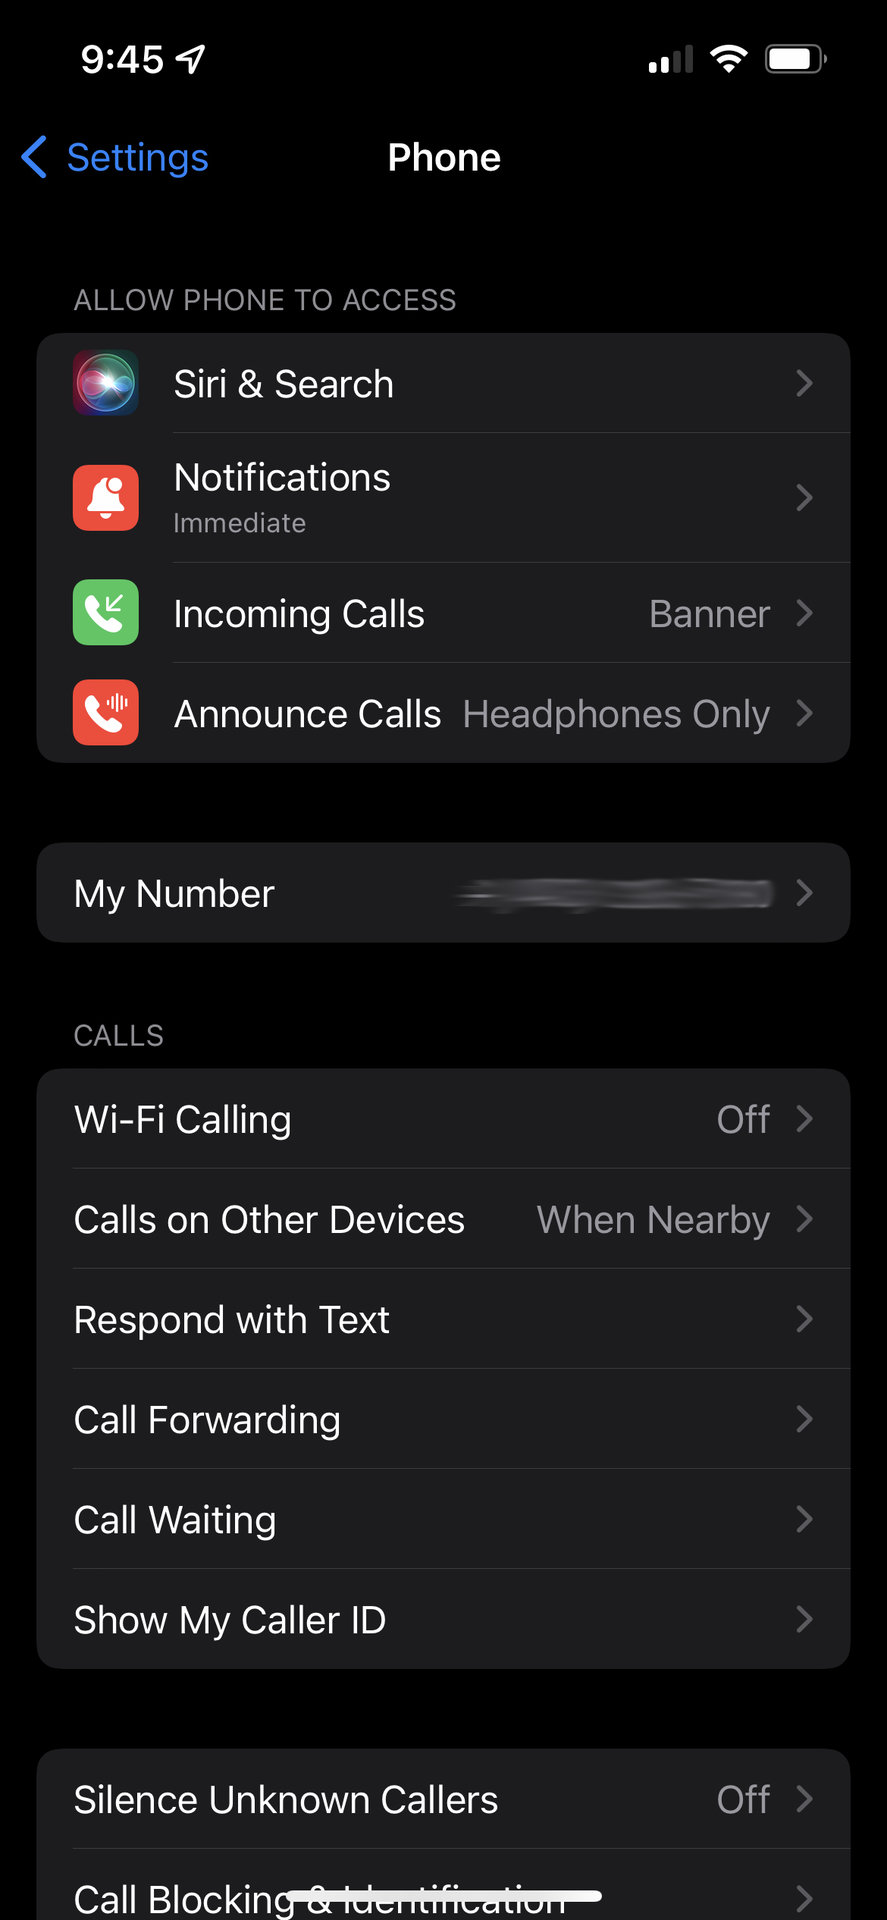 Phone settings in iOS 15 censored